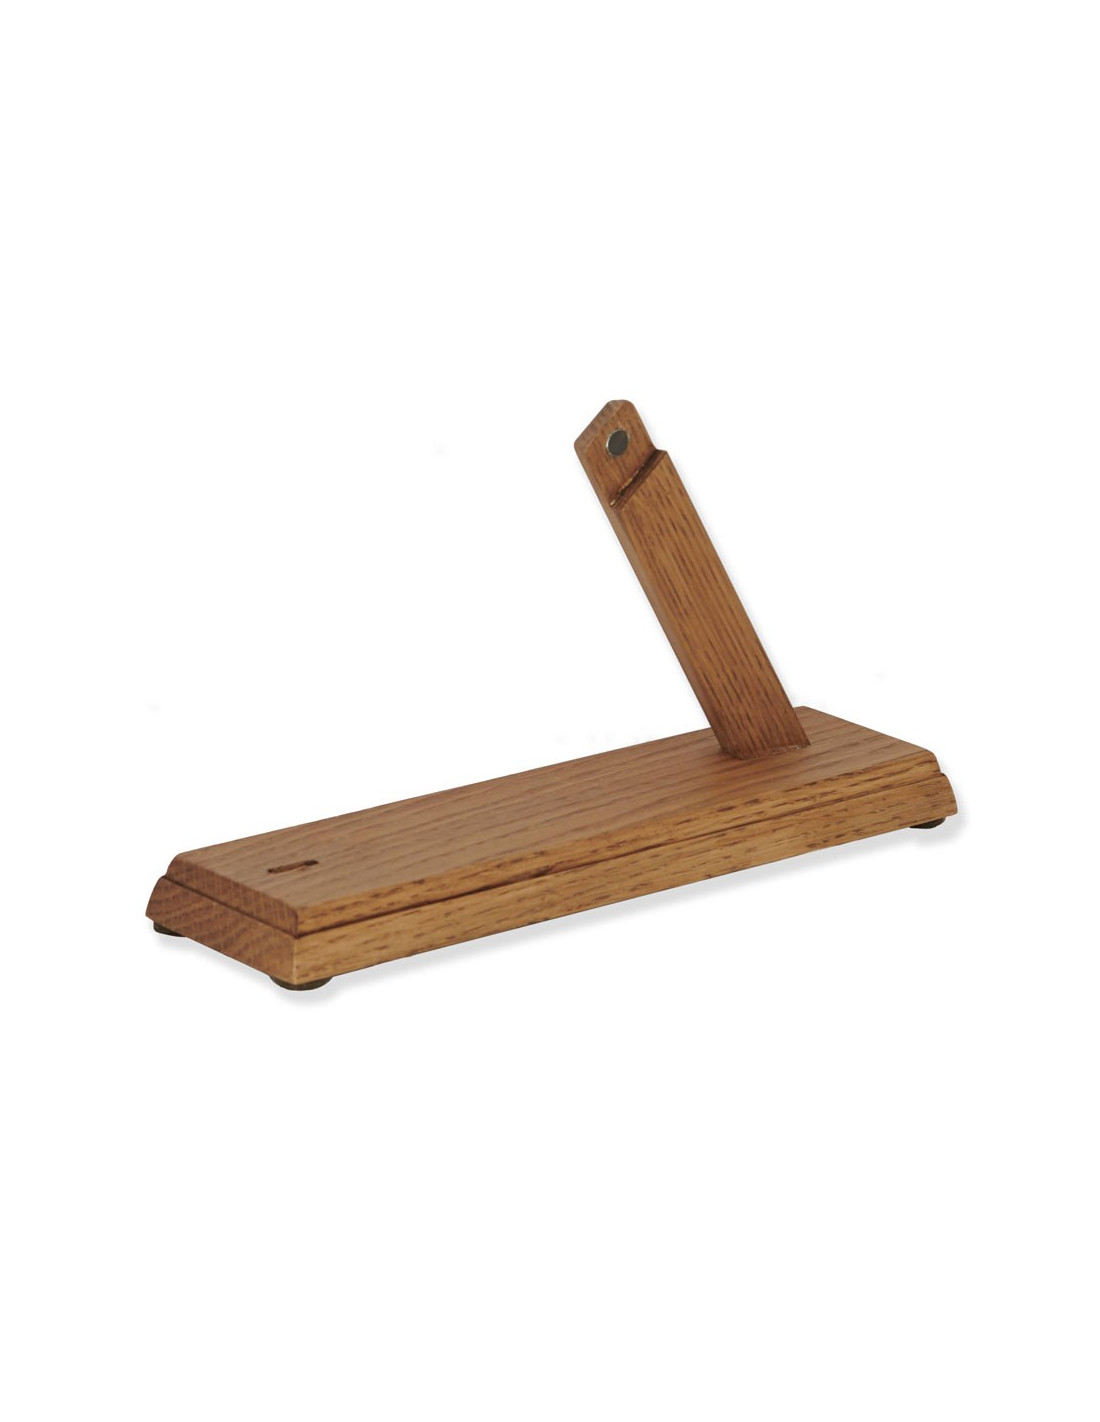 Expositor de madera para 1 cuchillo o navaja ⚔️ Tienda-Medieval